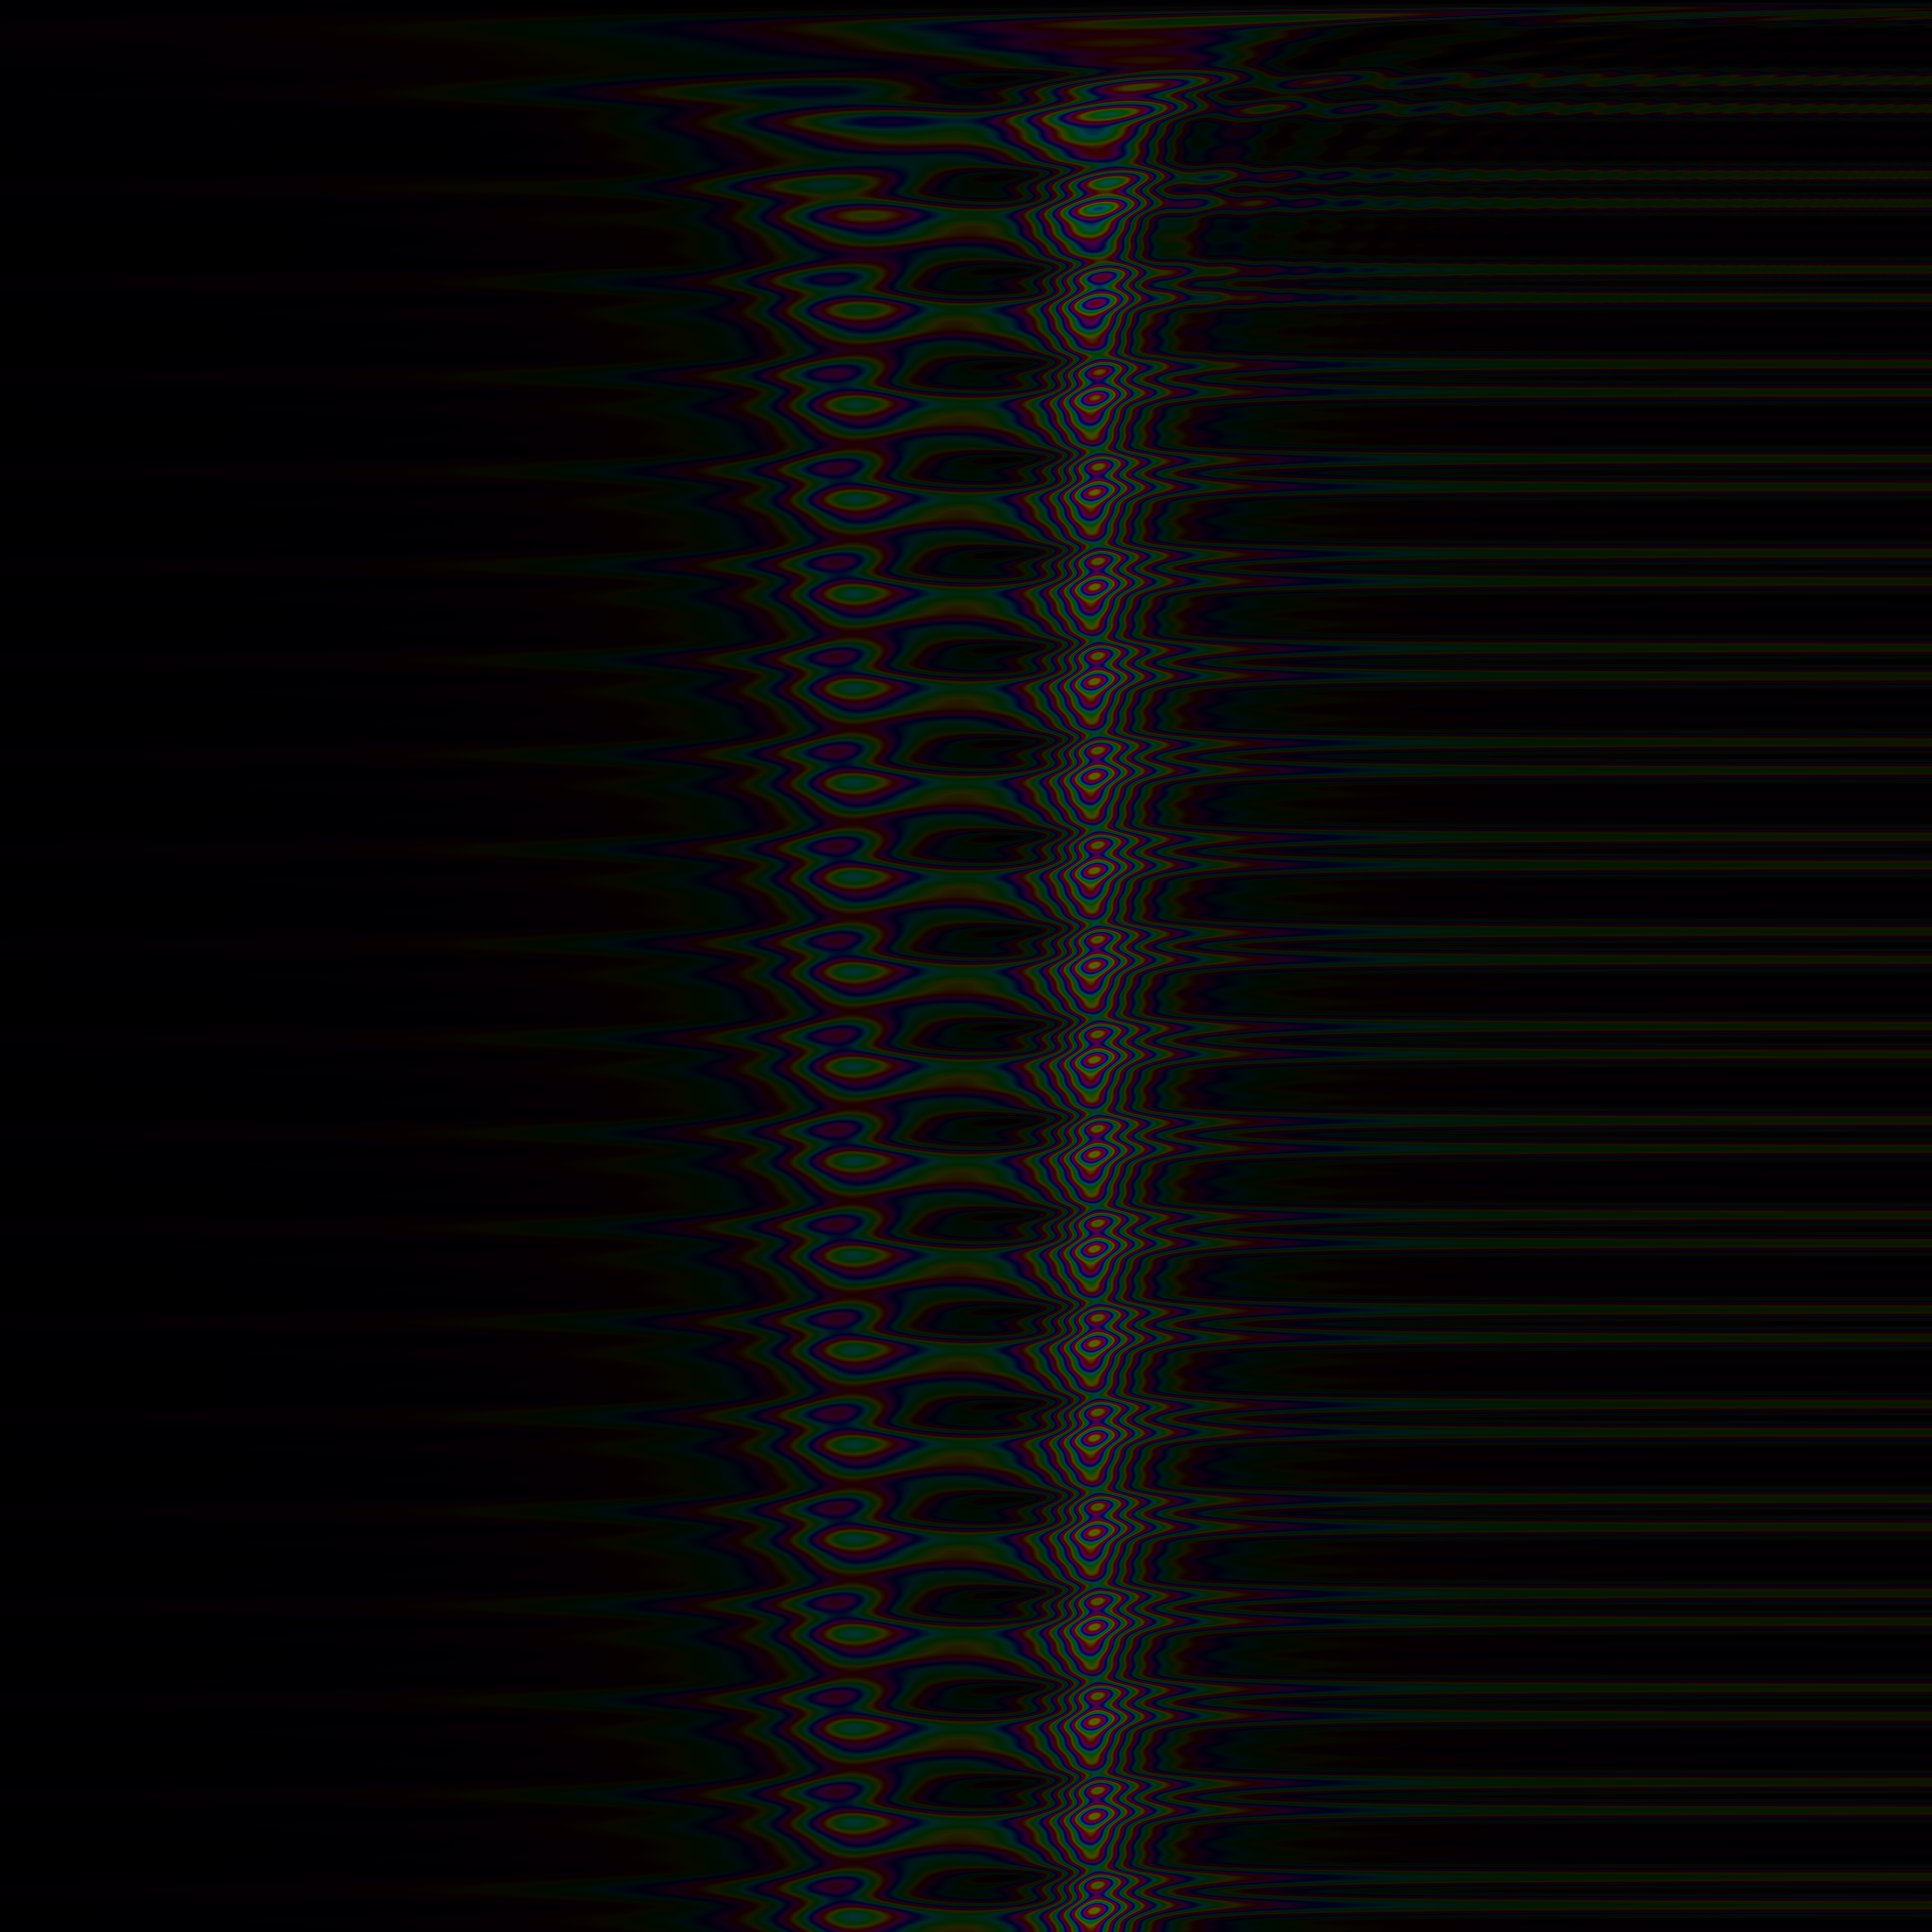 DST spectrum at μ0=0.99